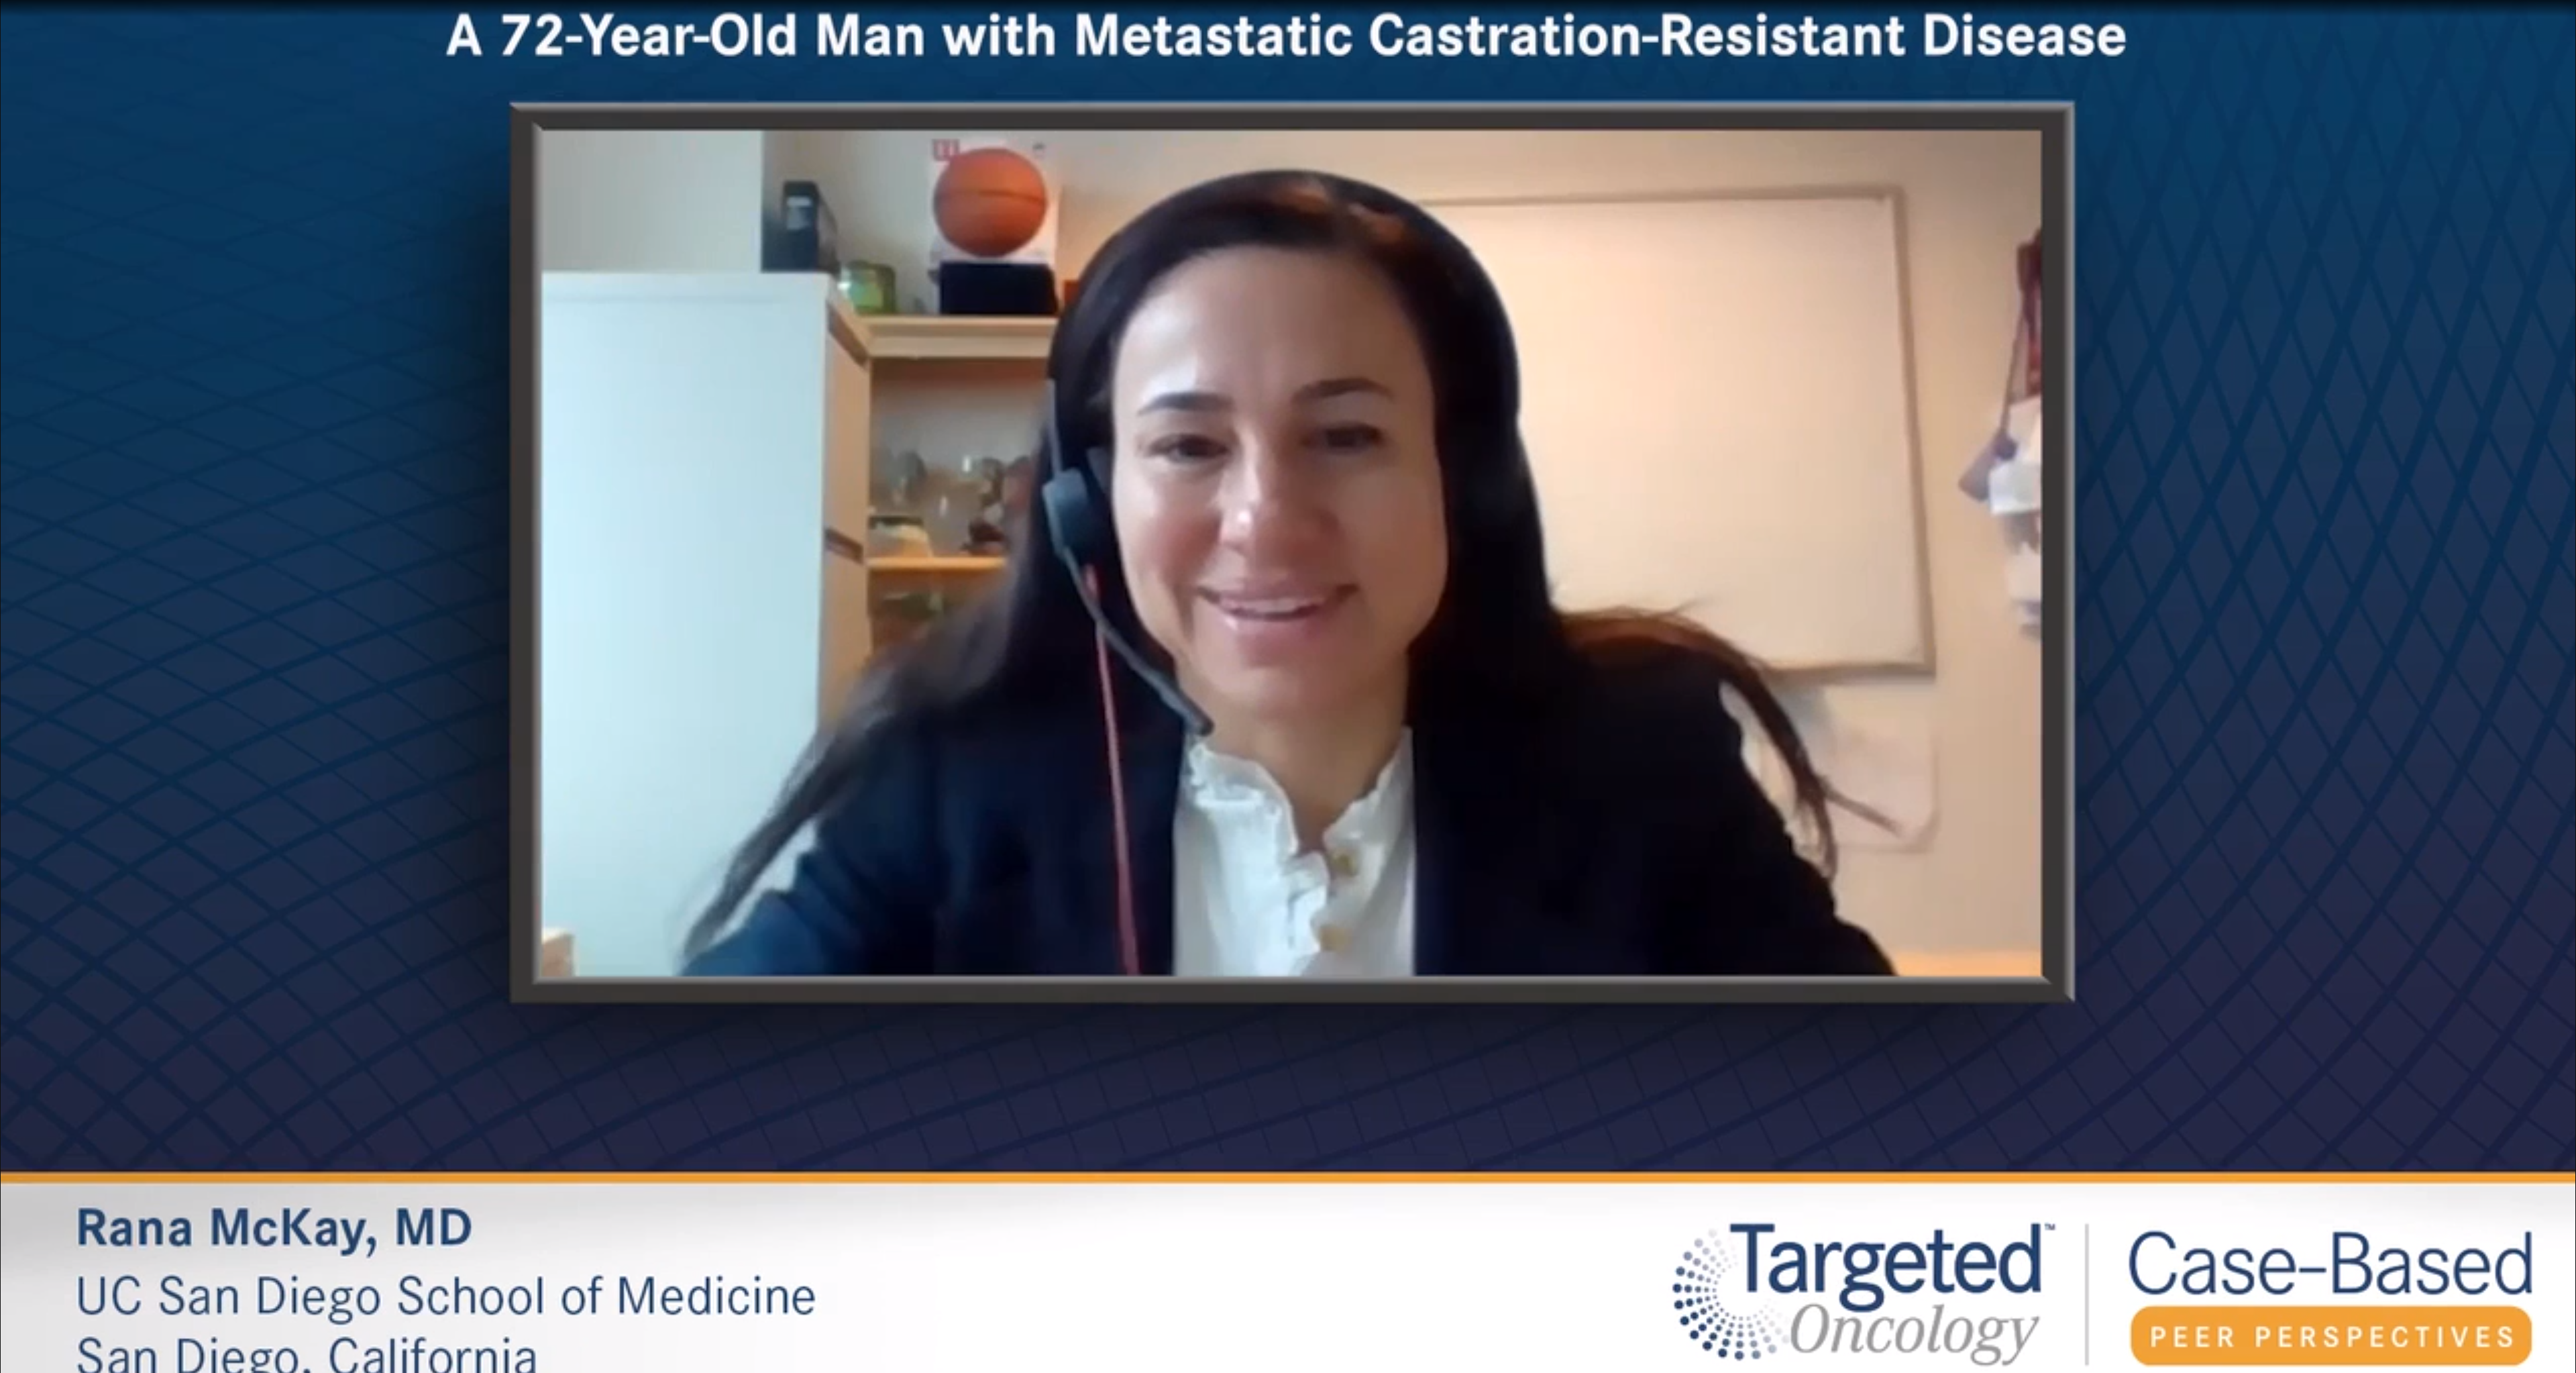 Modern Standards of Care in the Metastatic Prostate Cancer Treatment Landscape